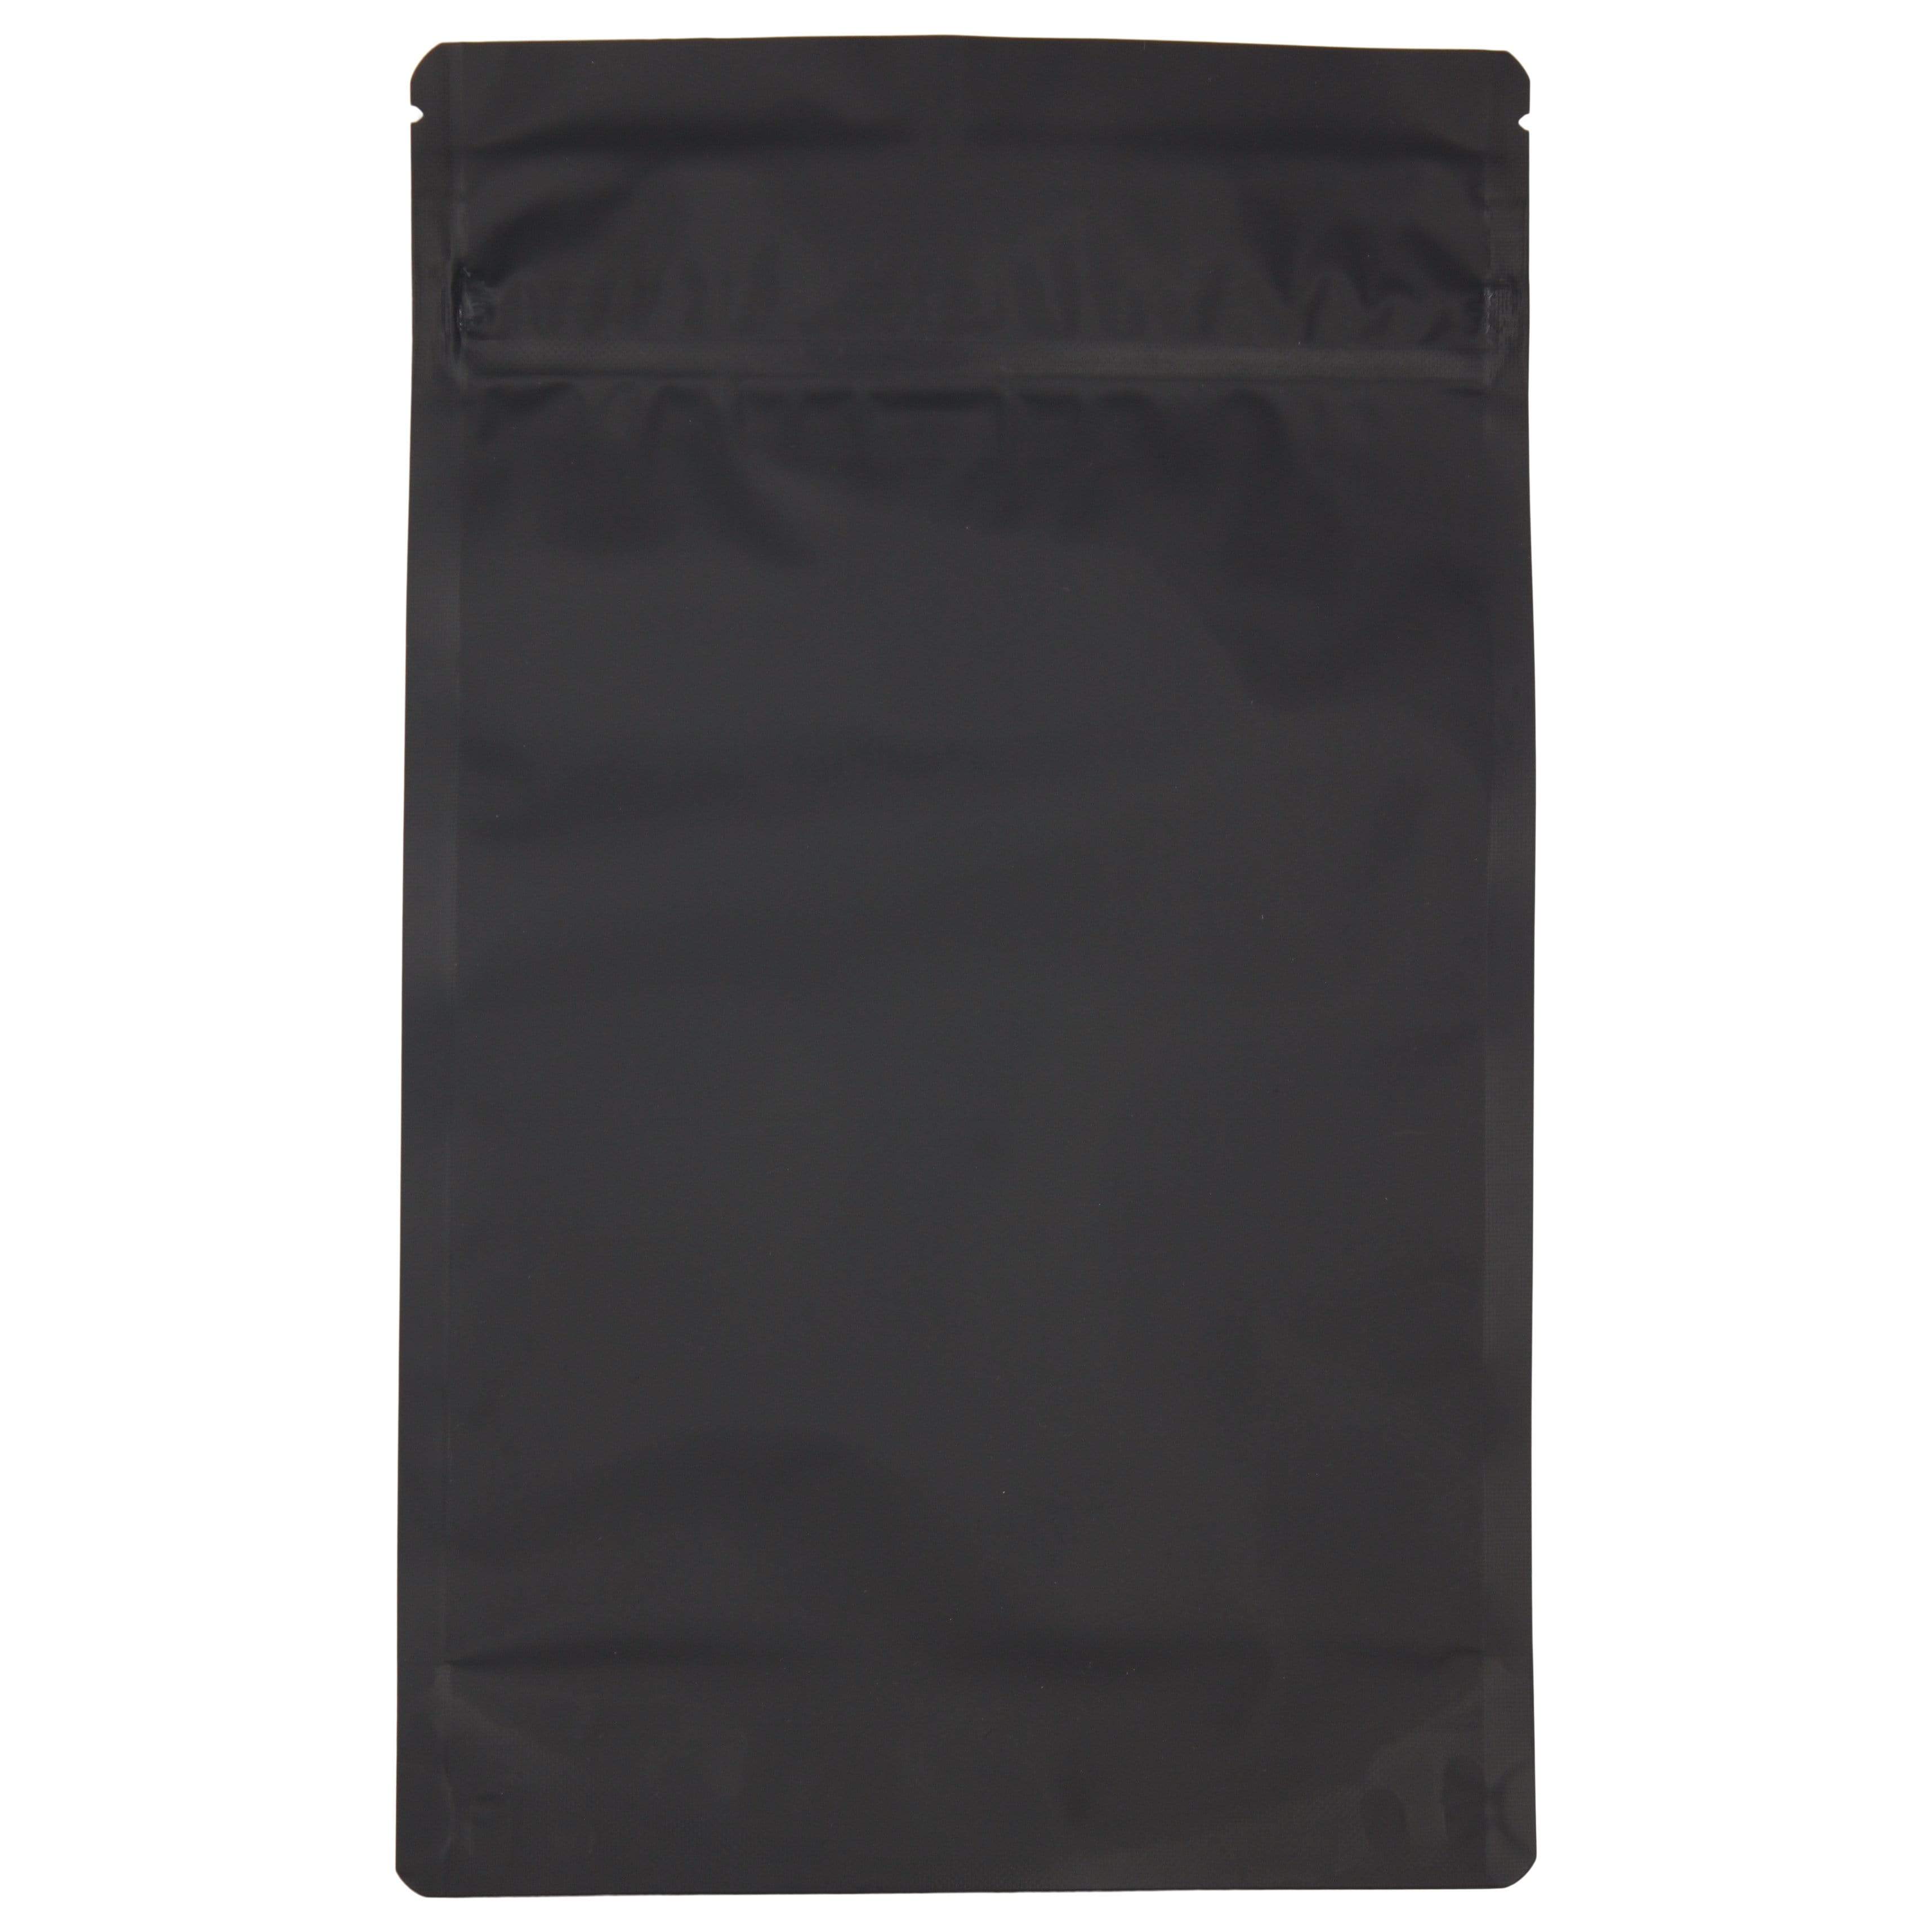 Bag King Child-Resistant Opaque Bag (1 oz) 6" x 9.8" Matte Black